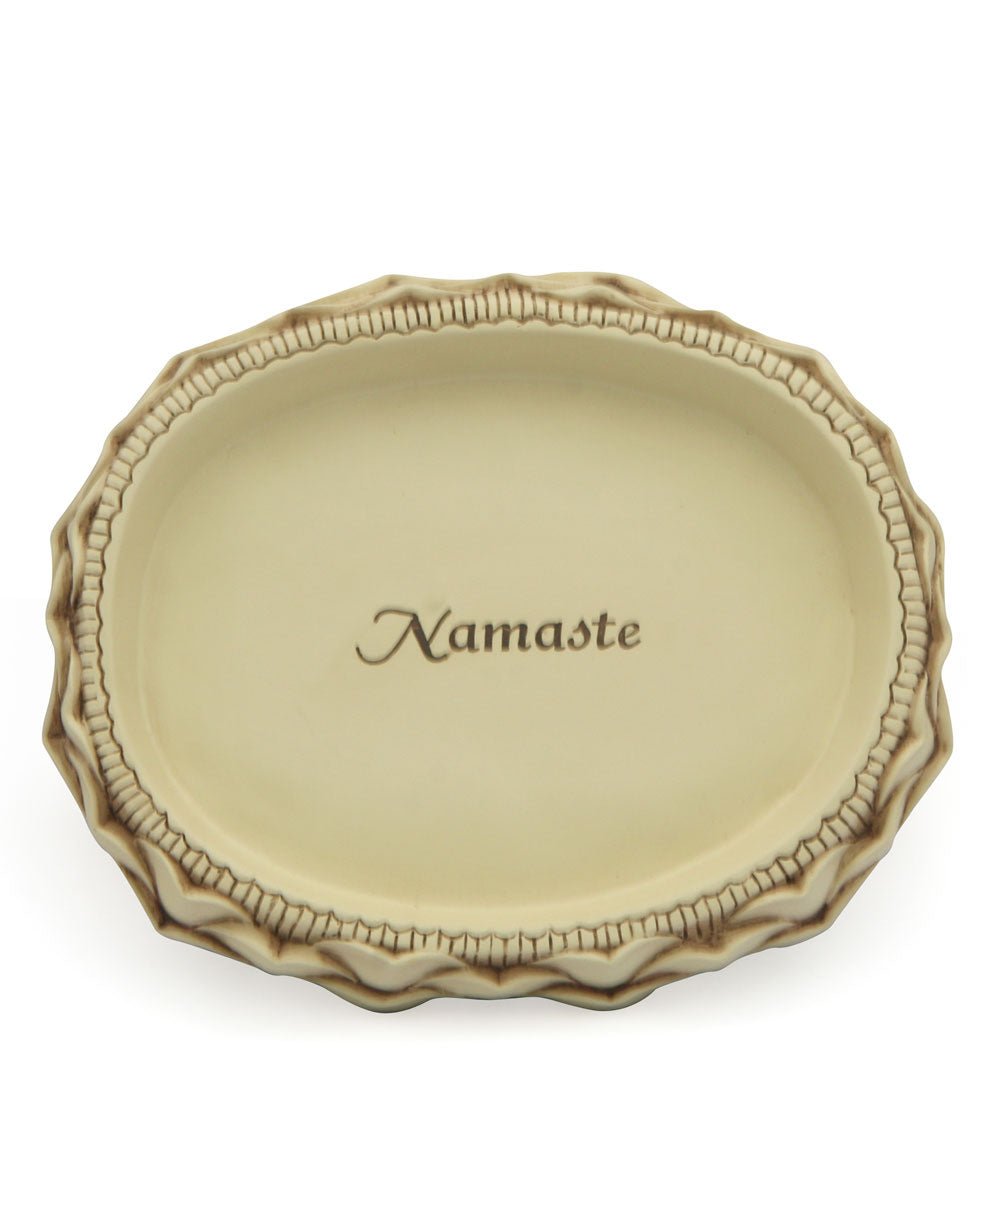 Namaste Lotus Decorative Tray and Charm Bowl - Bowls